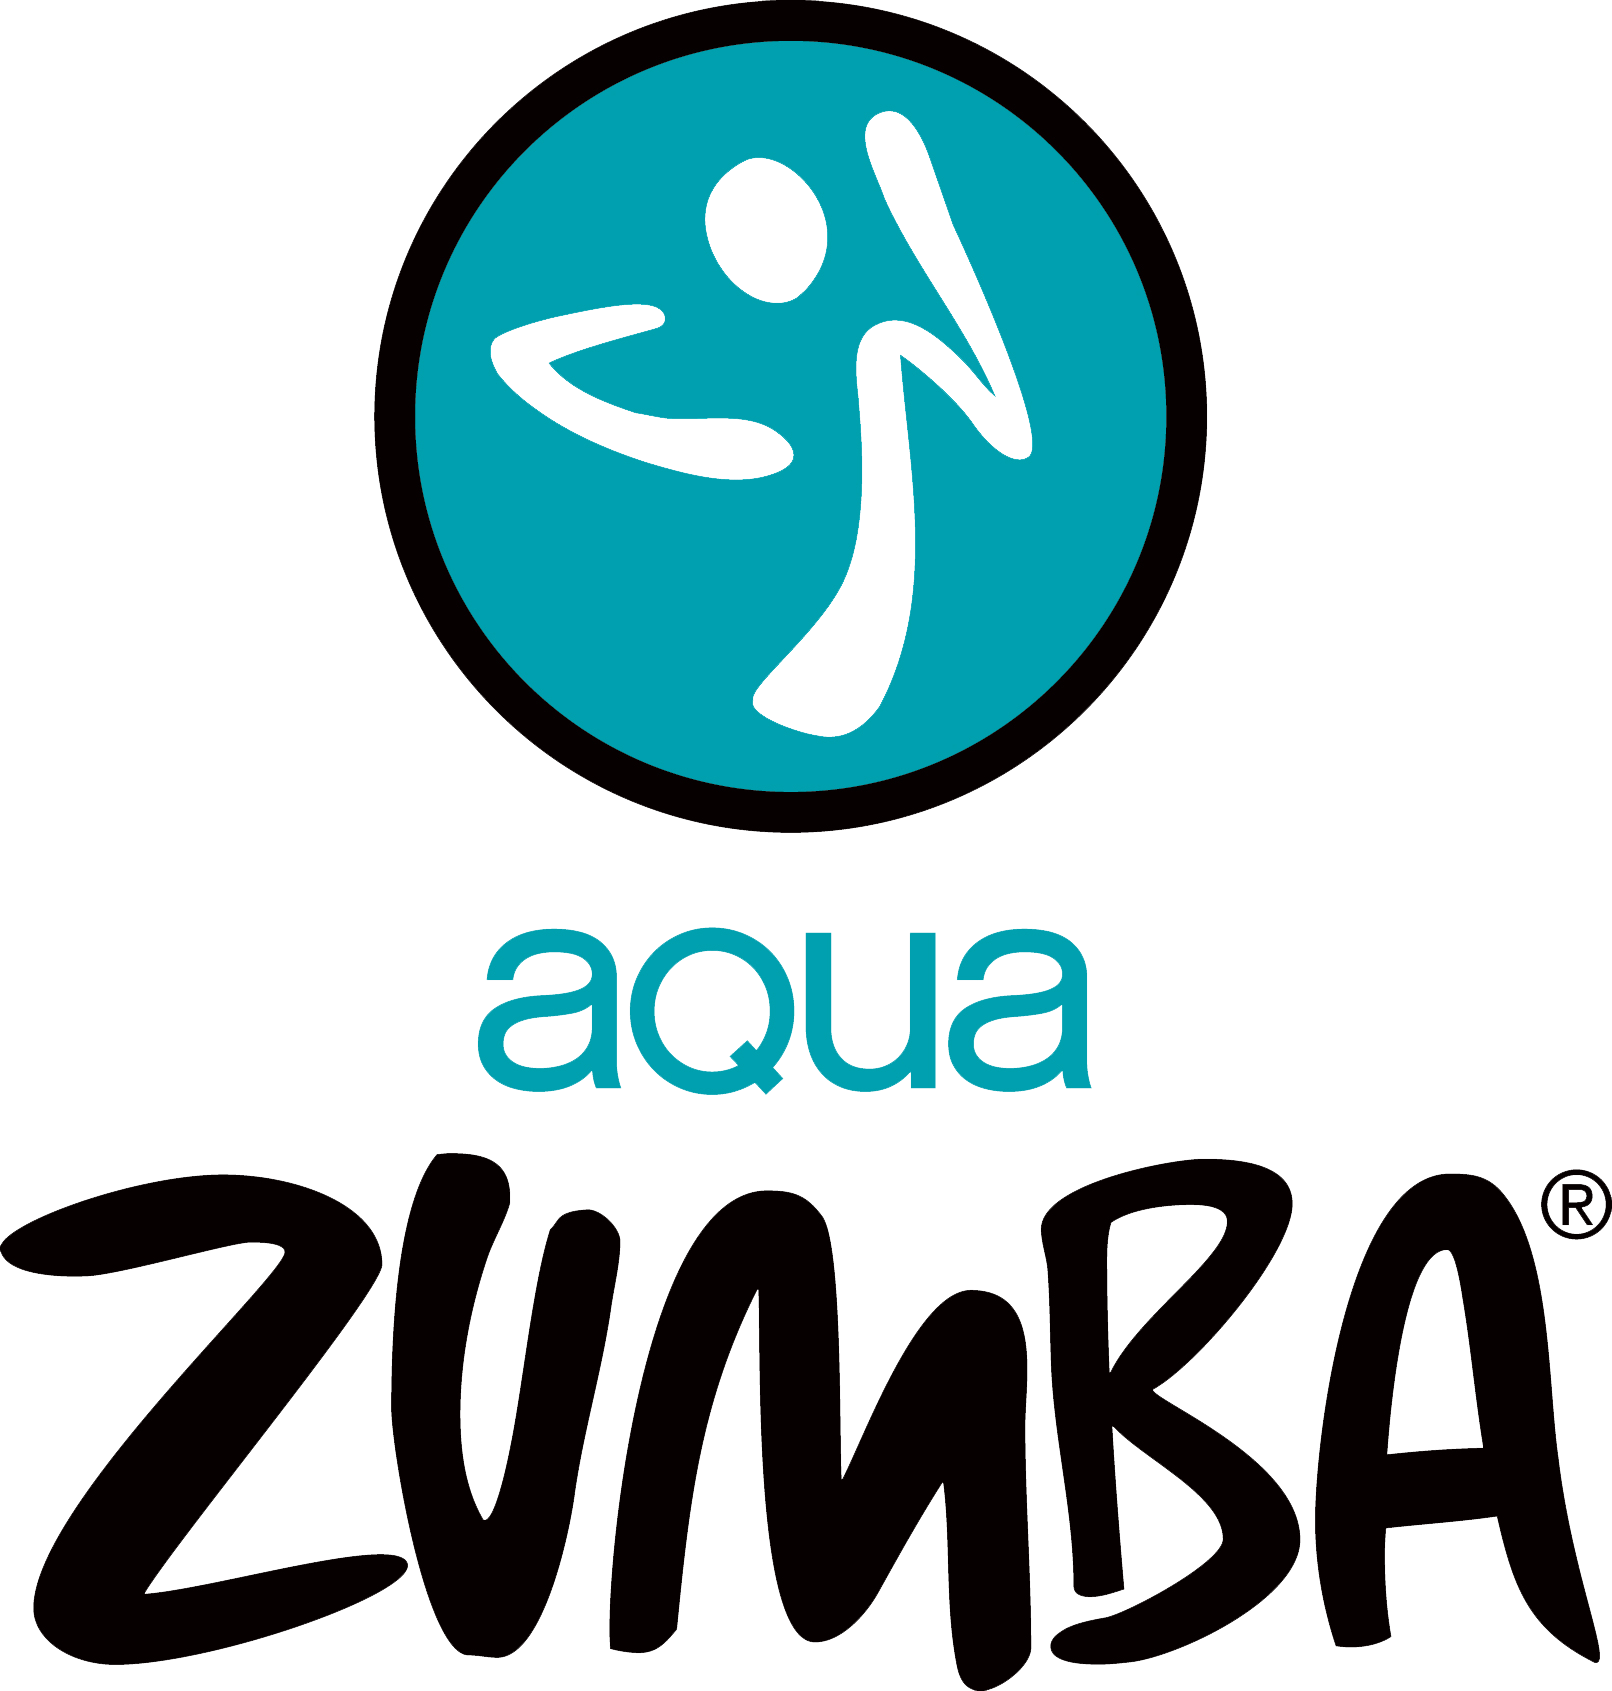 Aqua Zumba Logo PNG image